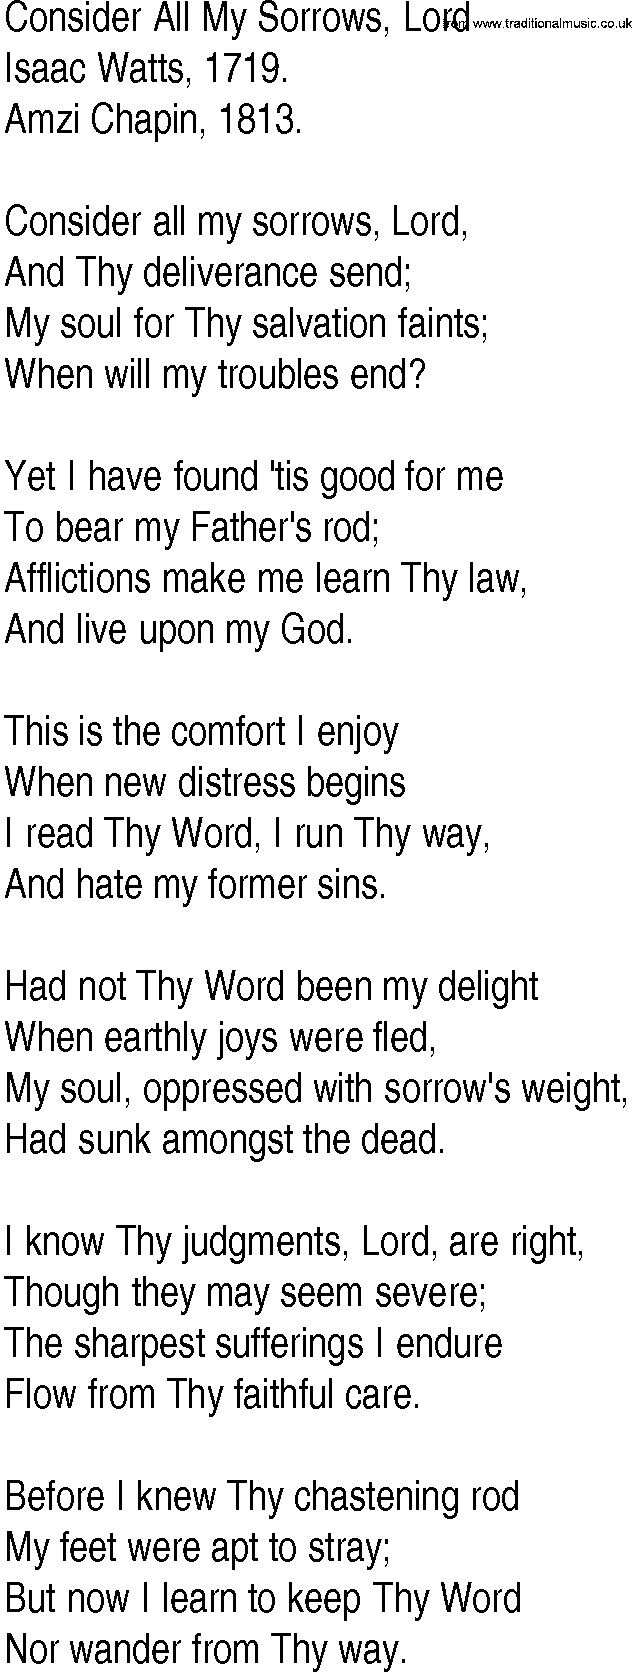 Hymn and Gospel Song: Consider All My Sorrows, Lord by Isaac Watts lyrics